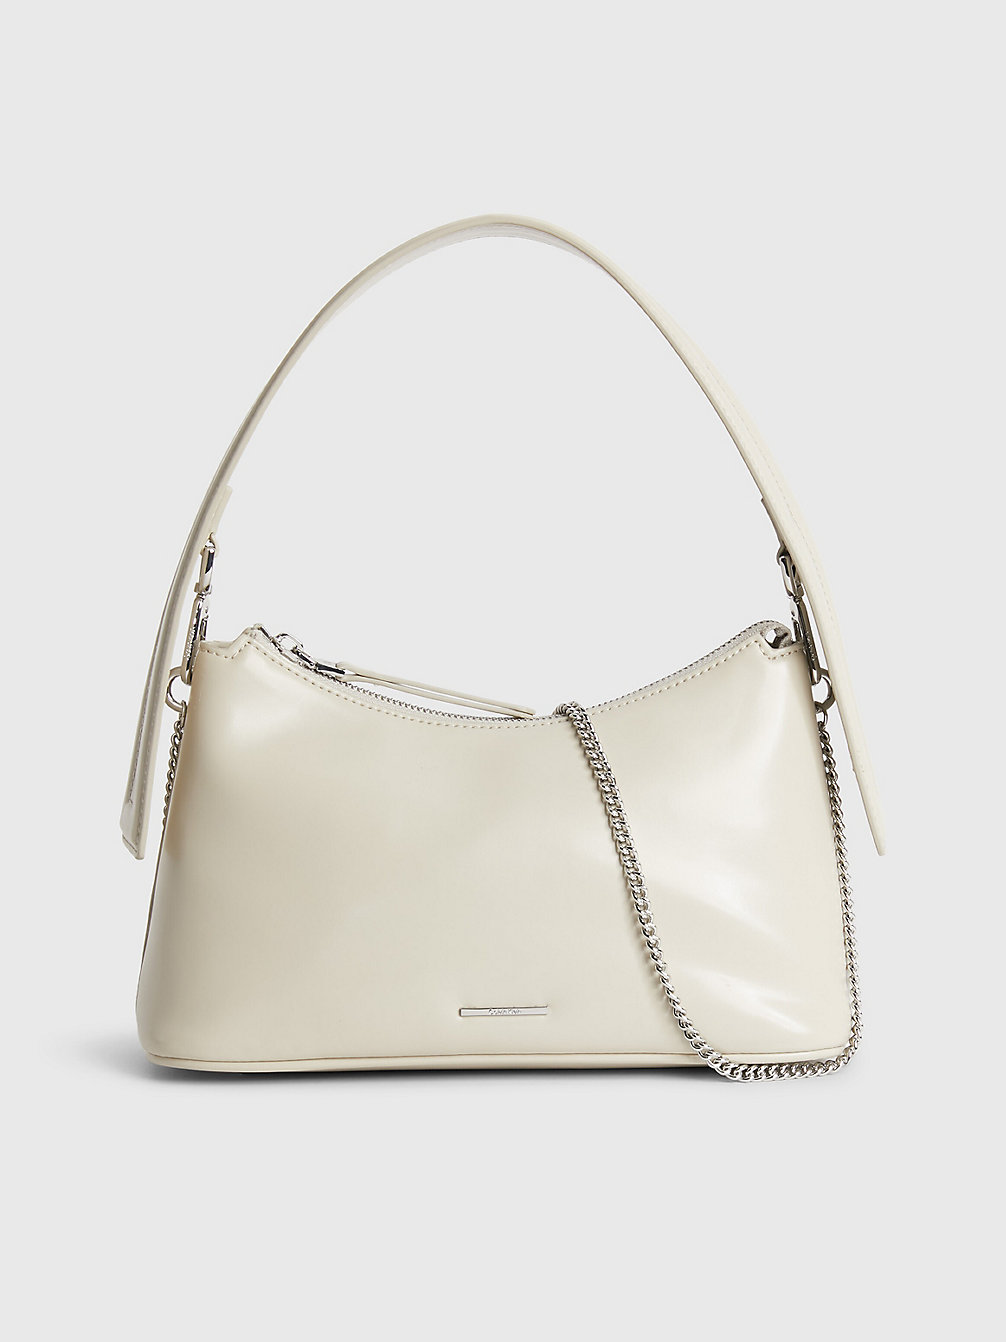 STONEY BEIGE Small Vegan Leather Shoulder Bag undefined women Calvin Klein